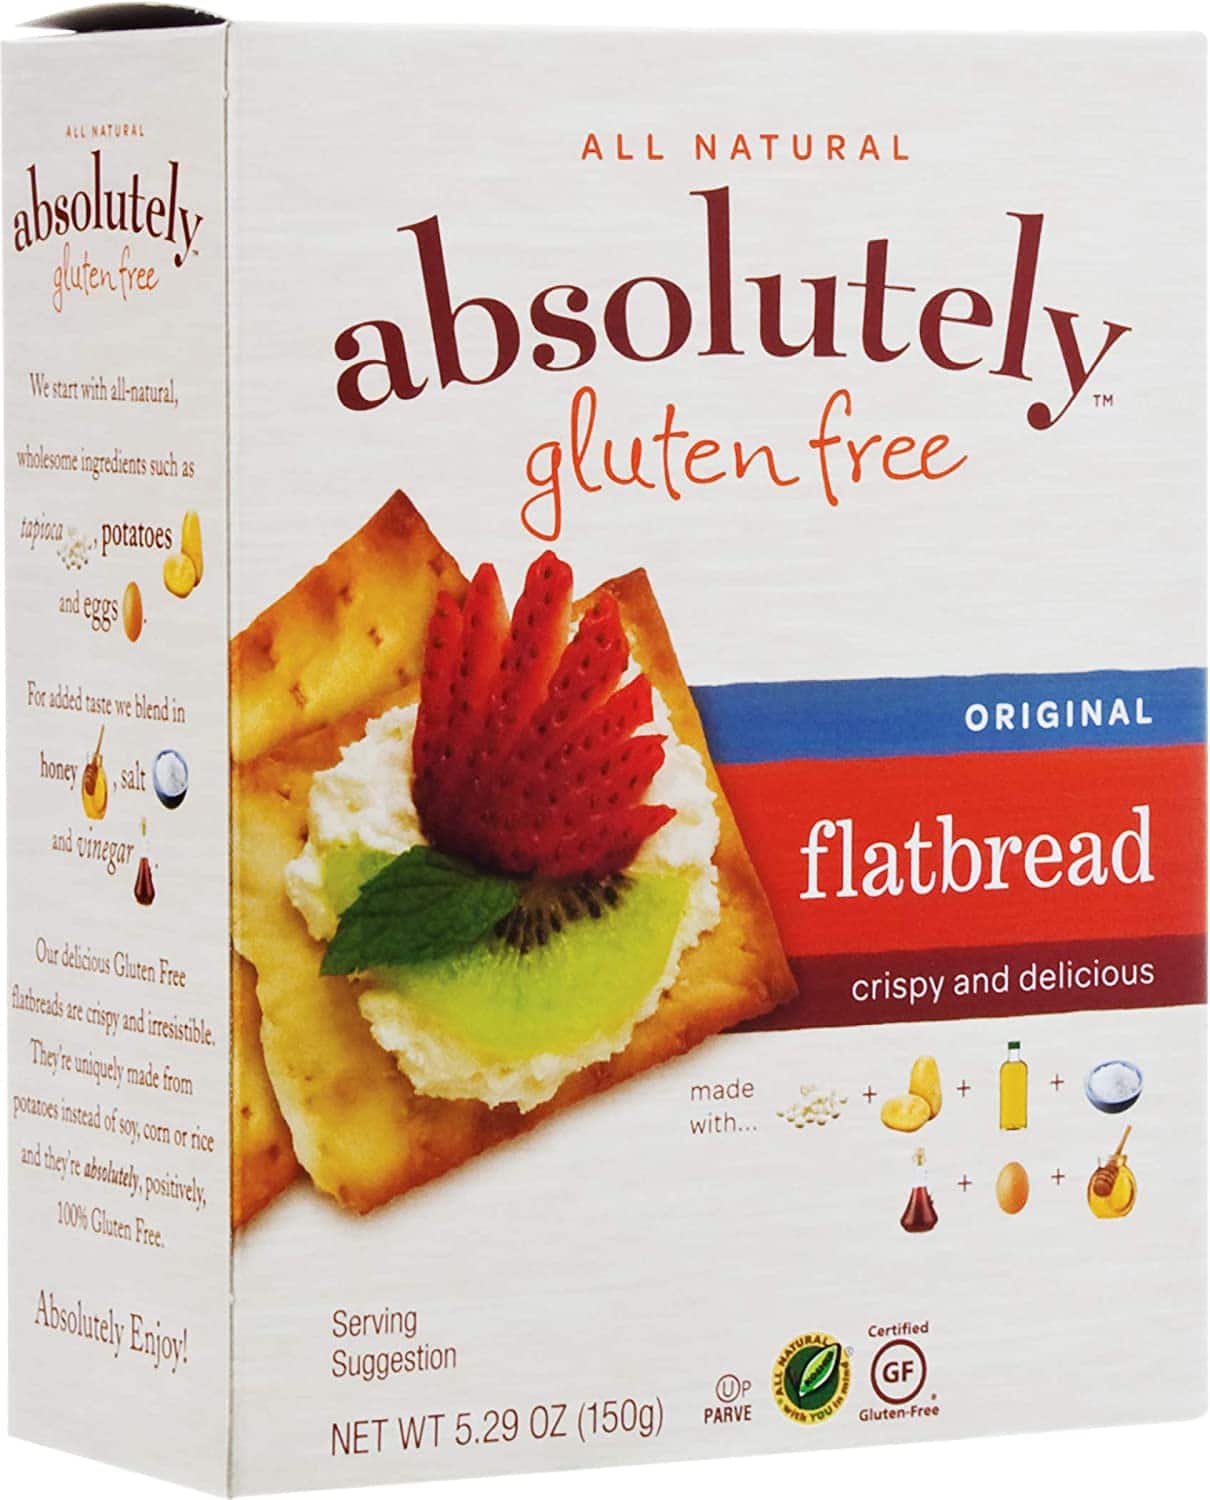 8. Absolutely Gluten Free Original Flatbread